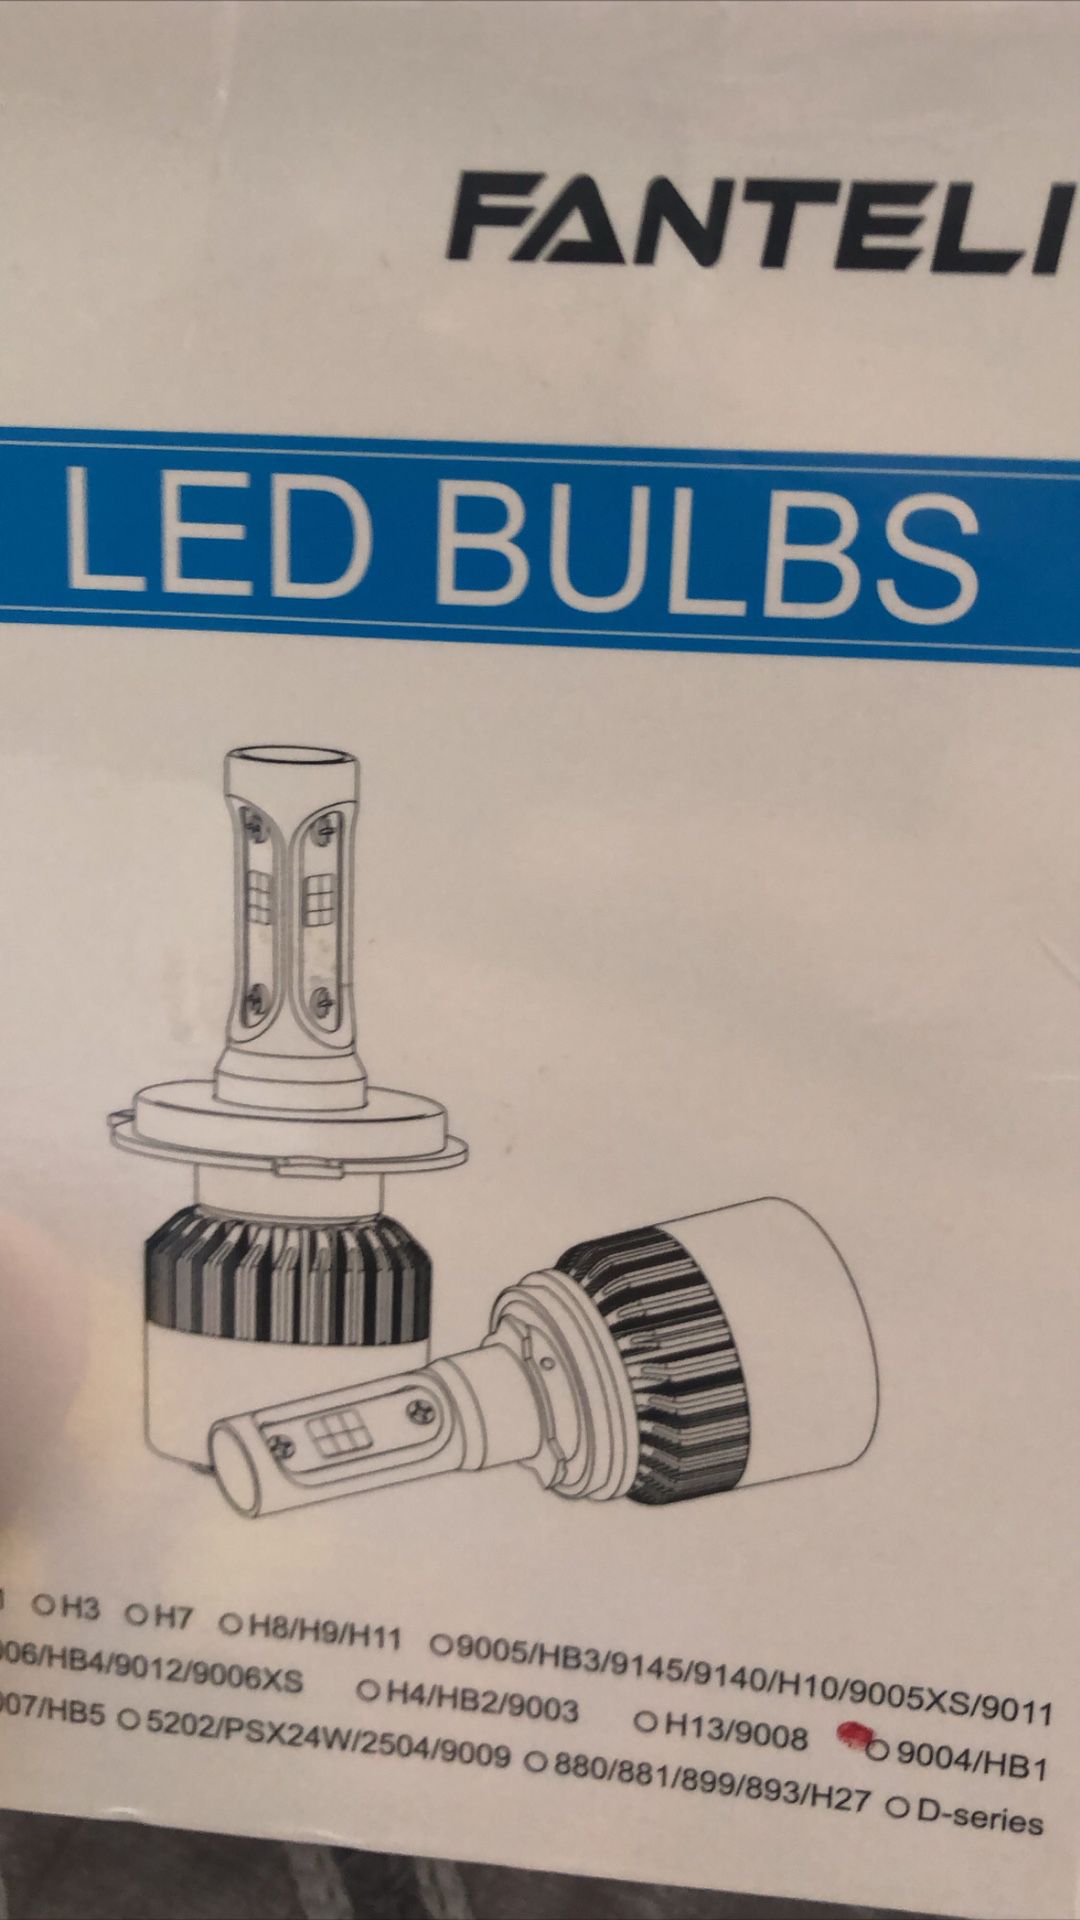 Foxbody headlight led bulbs